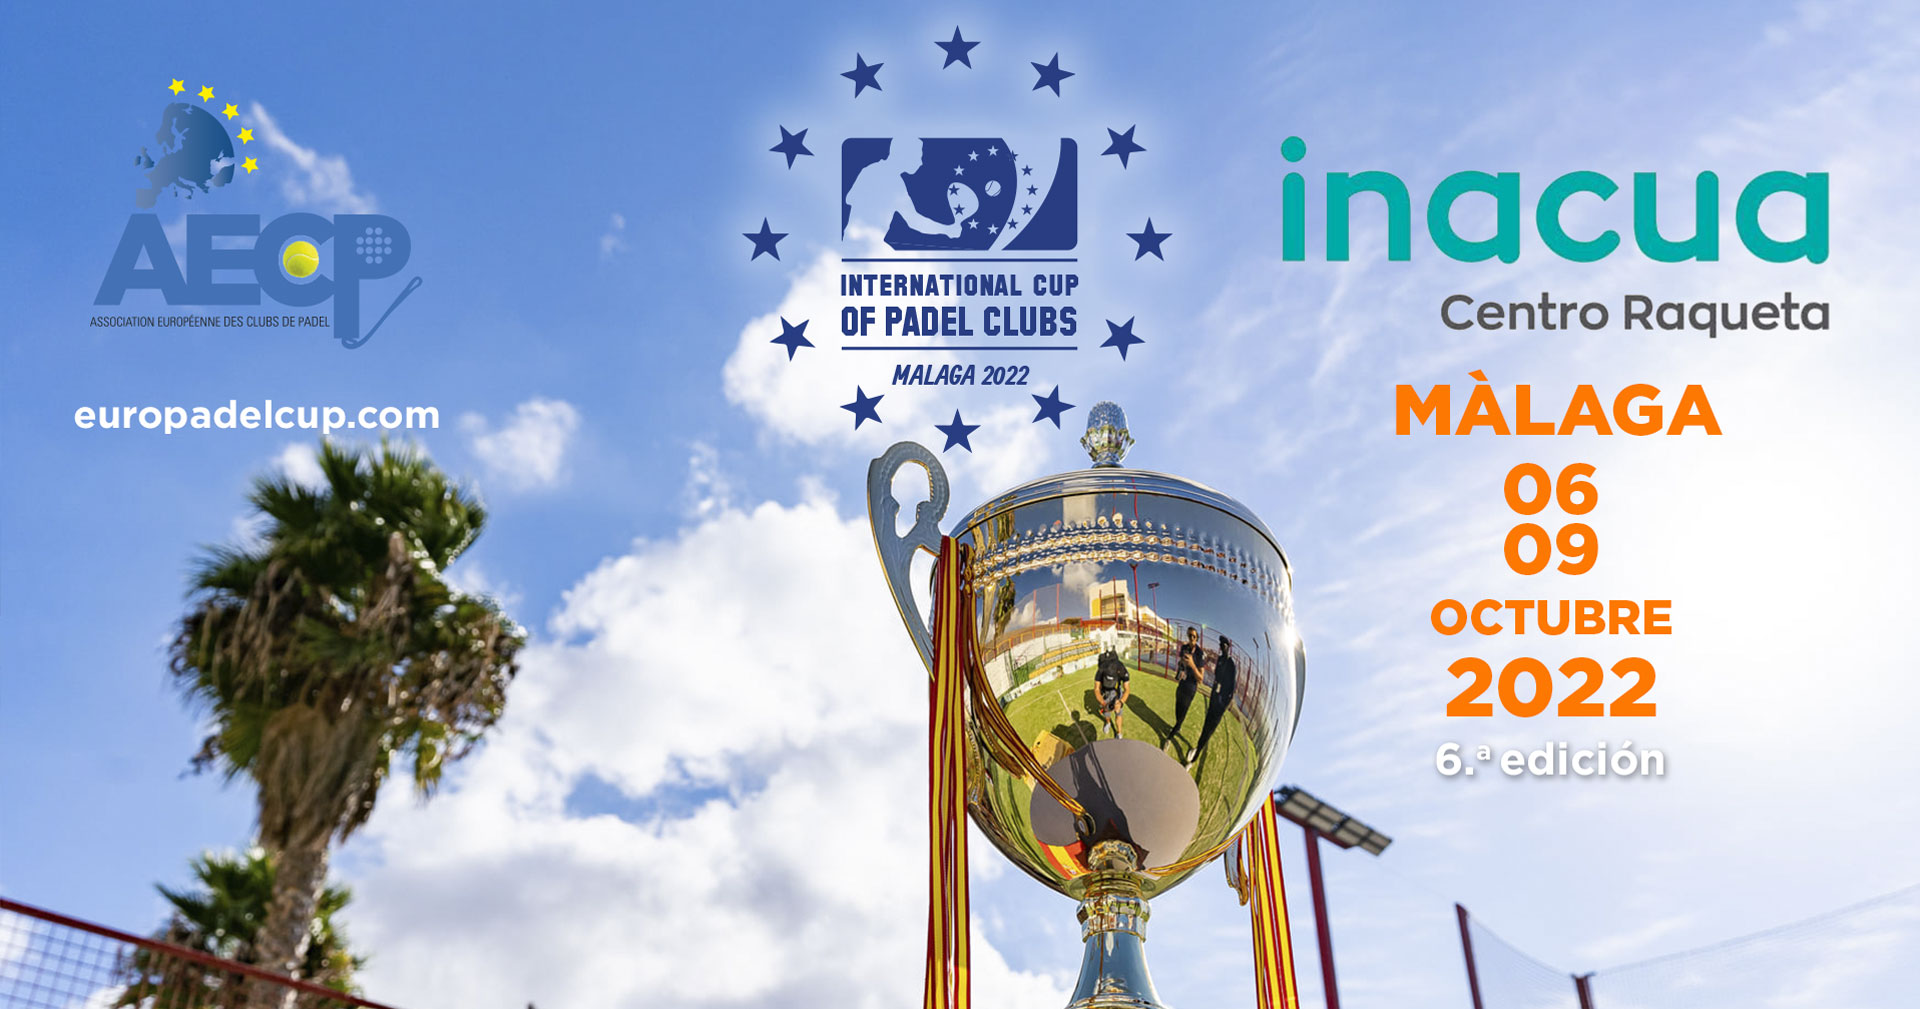 A EFCA lança a Taça Internacional de Clubes de Padel